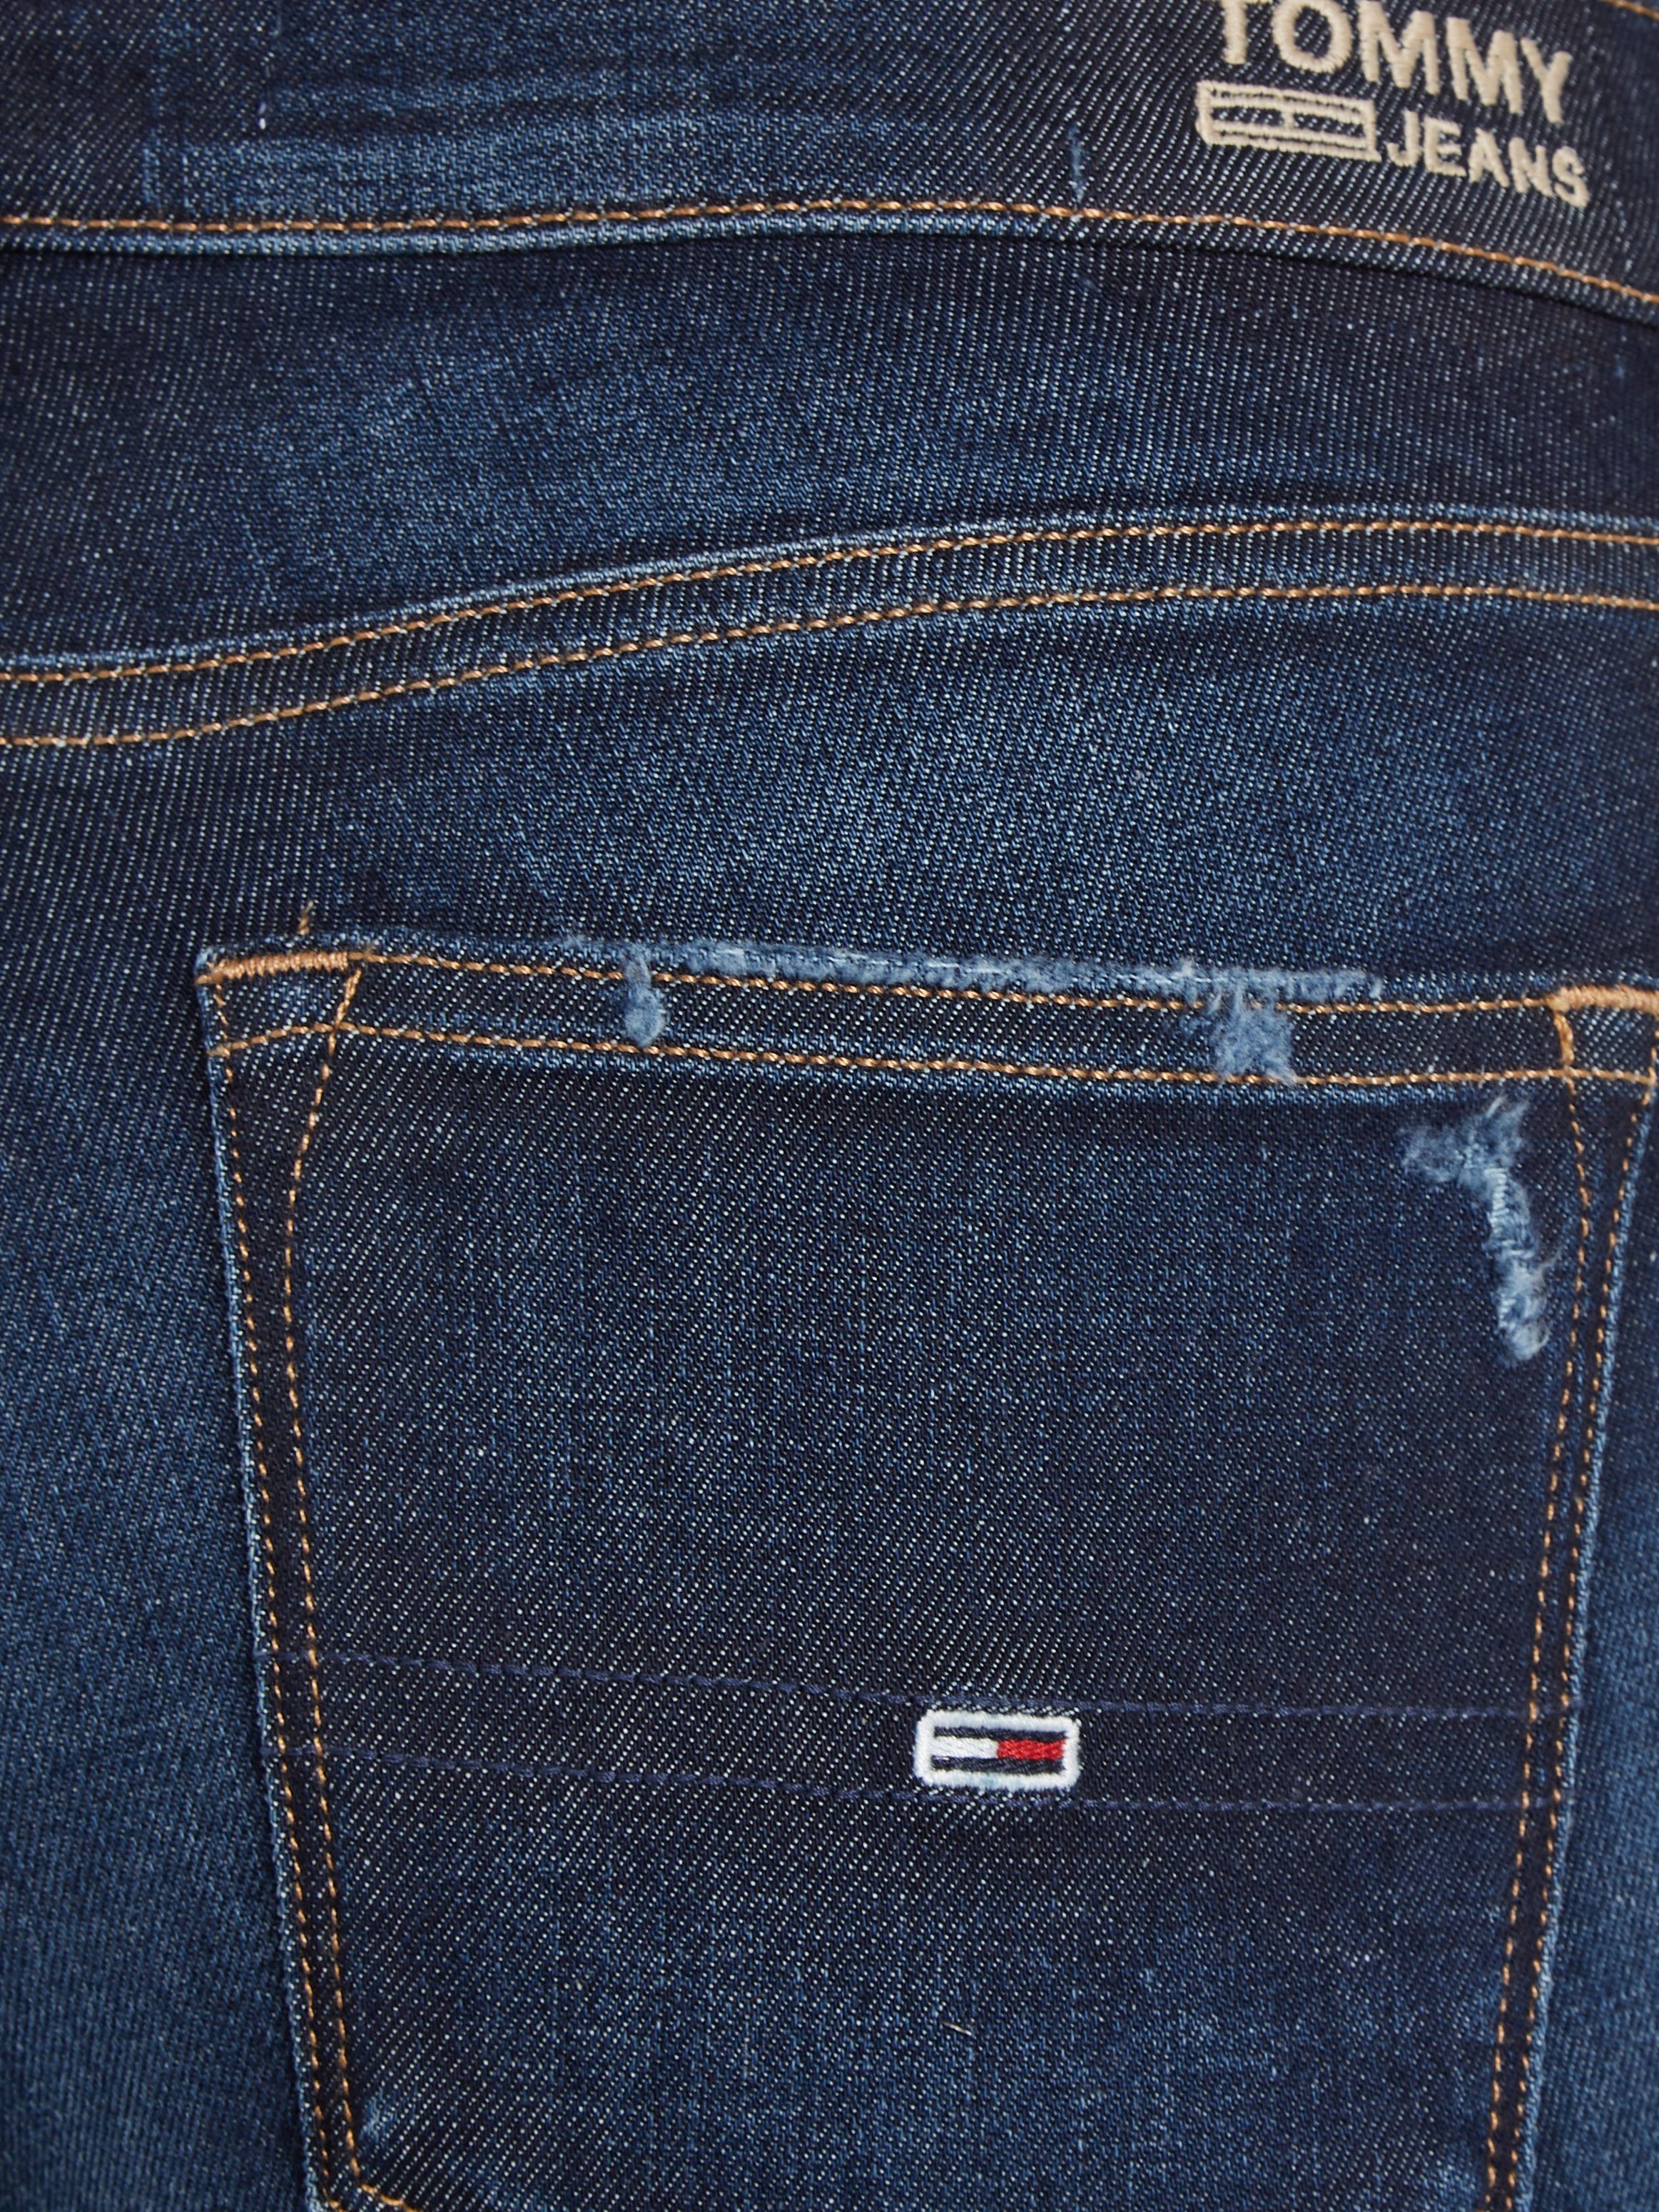 Jeans Jeans Markenlabel mit Denim_dark Skinny-fit-Jeans Tommy Tommy